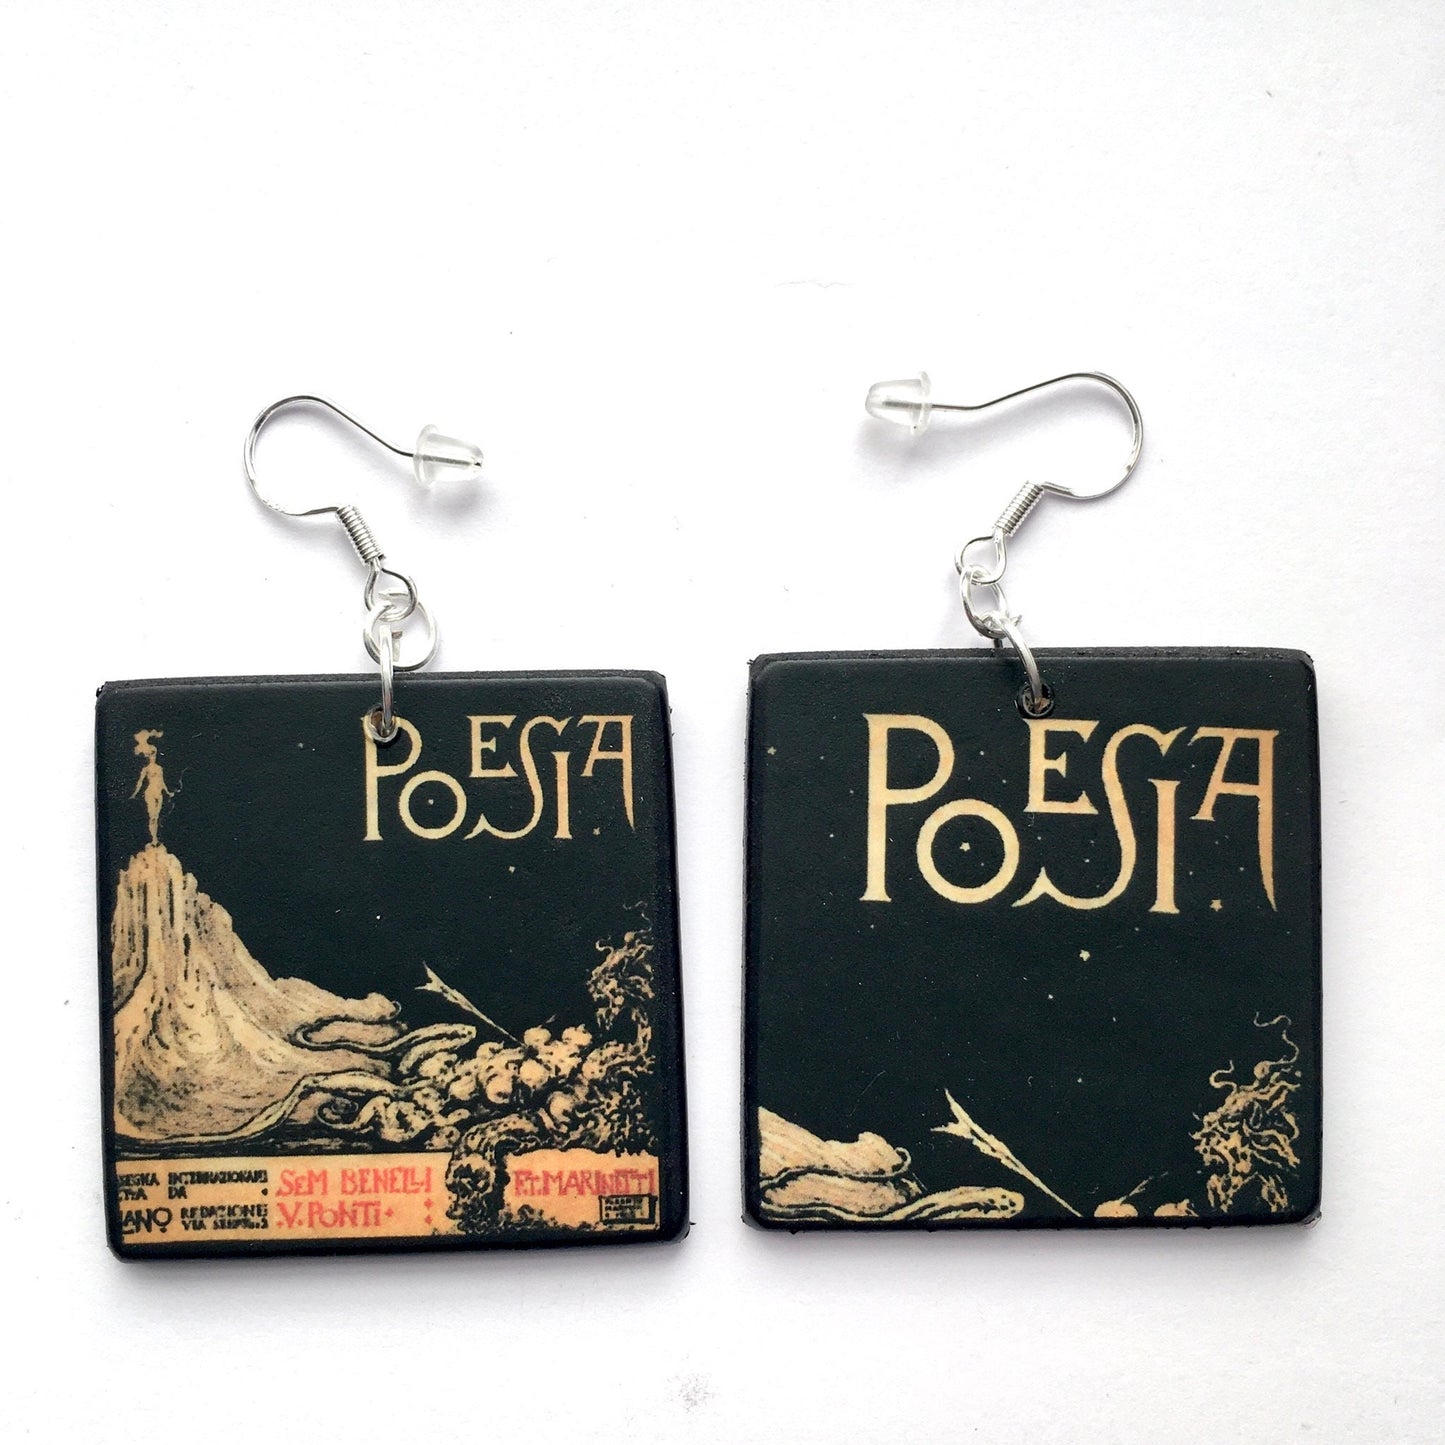 Poem book mismatched earrings. Italian Marinetti art cover.